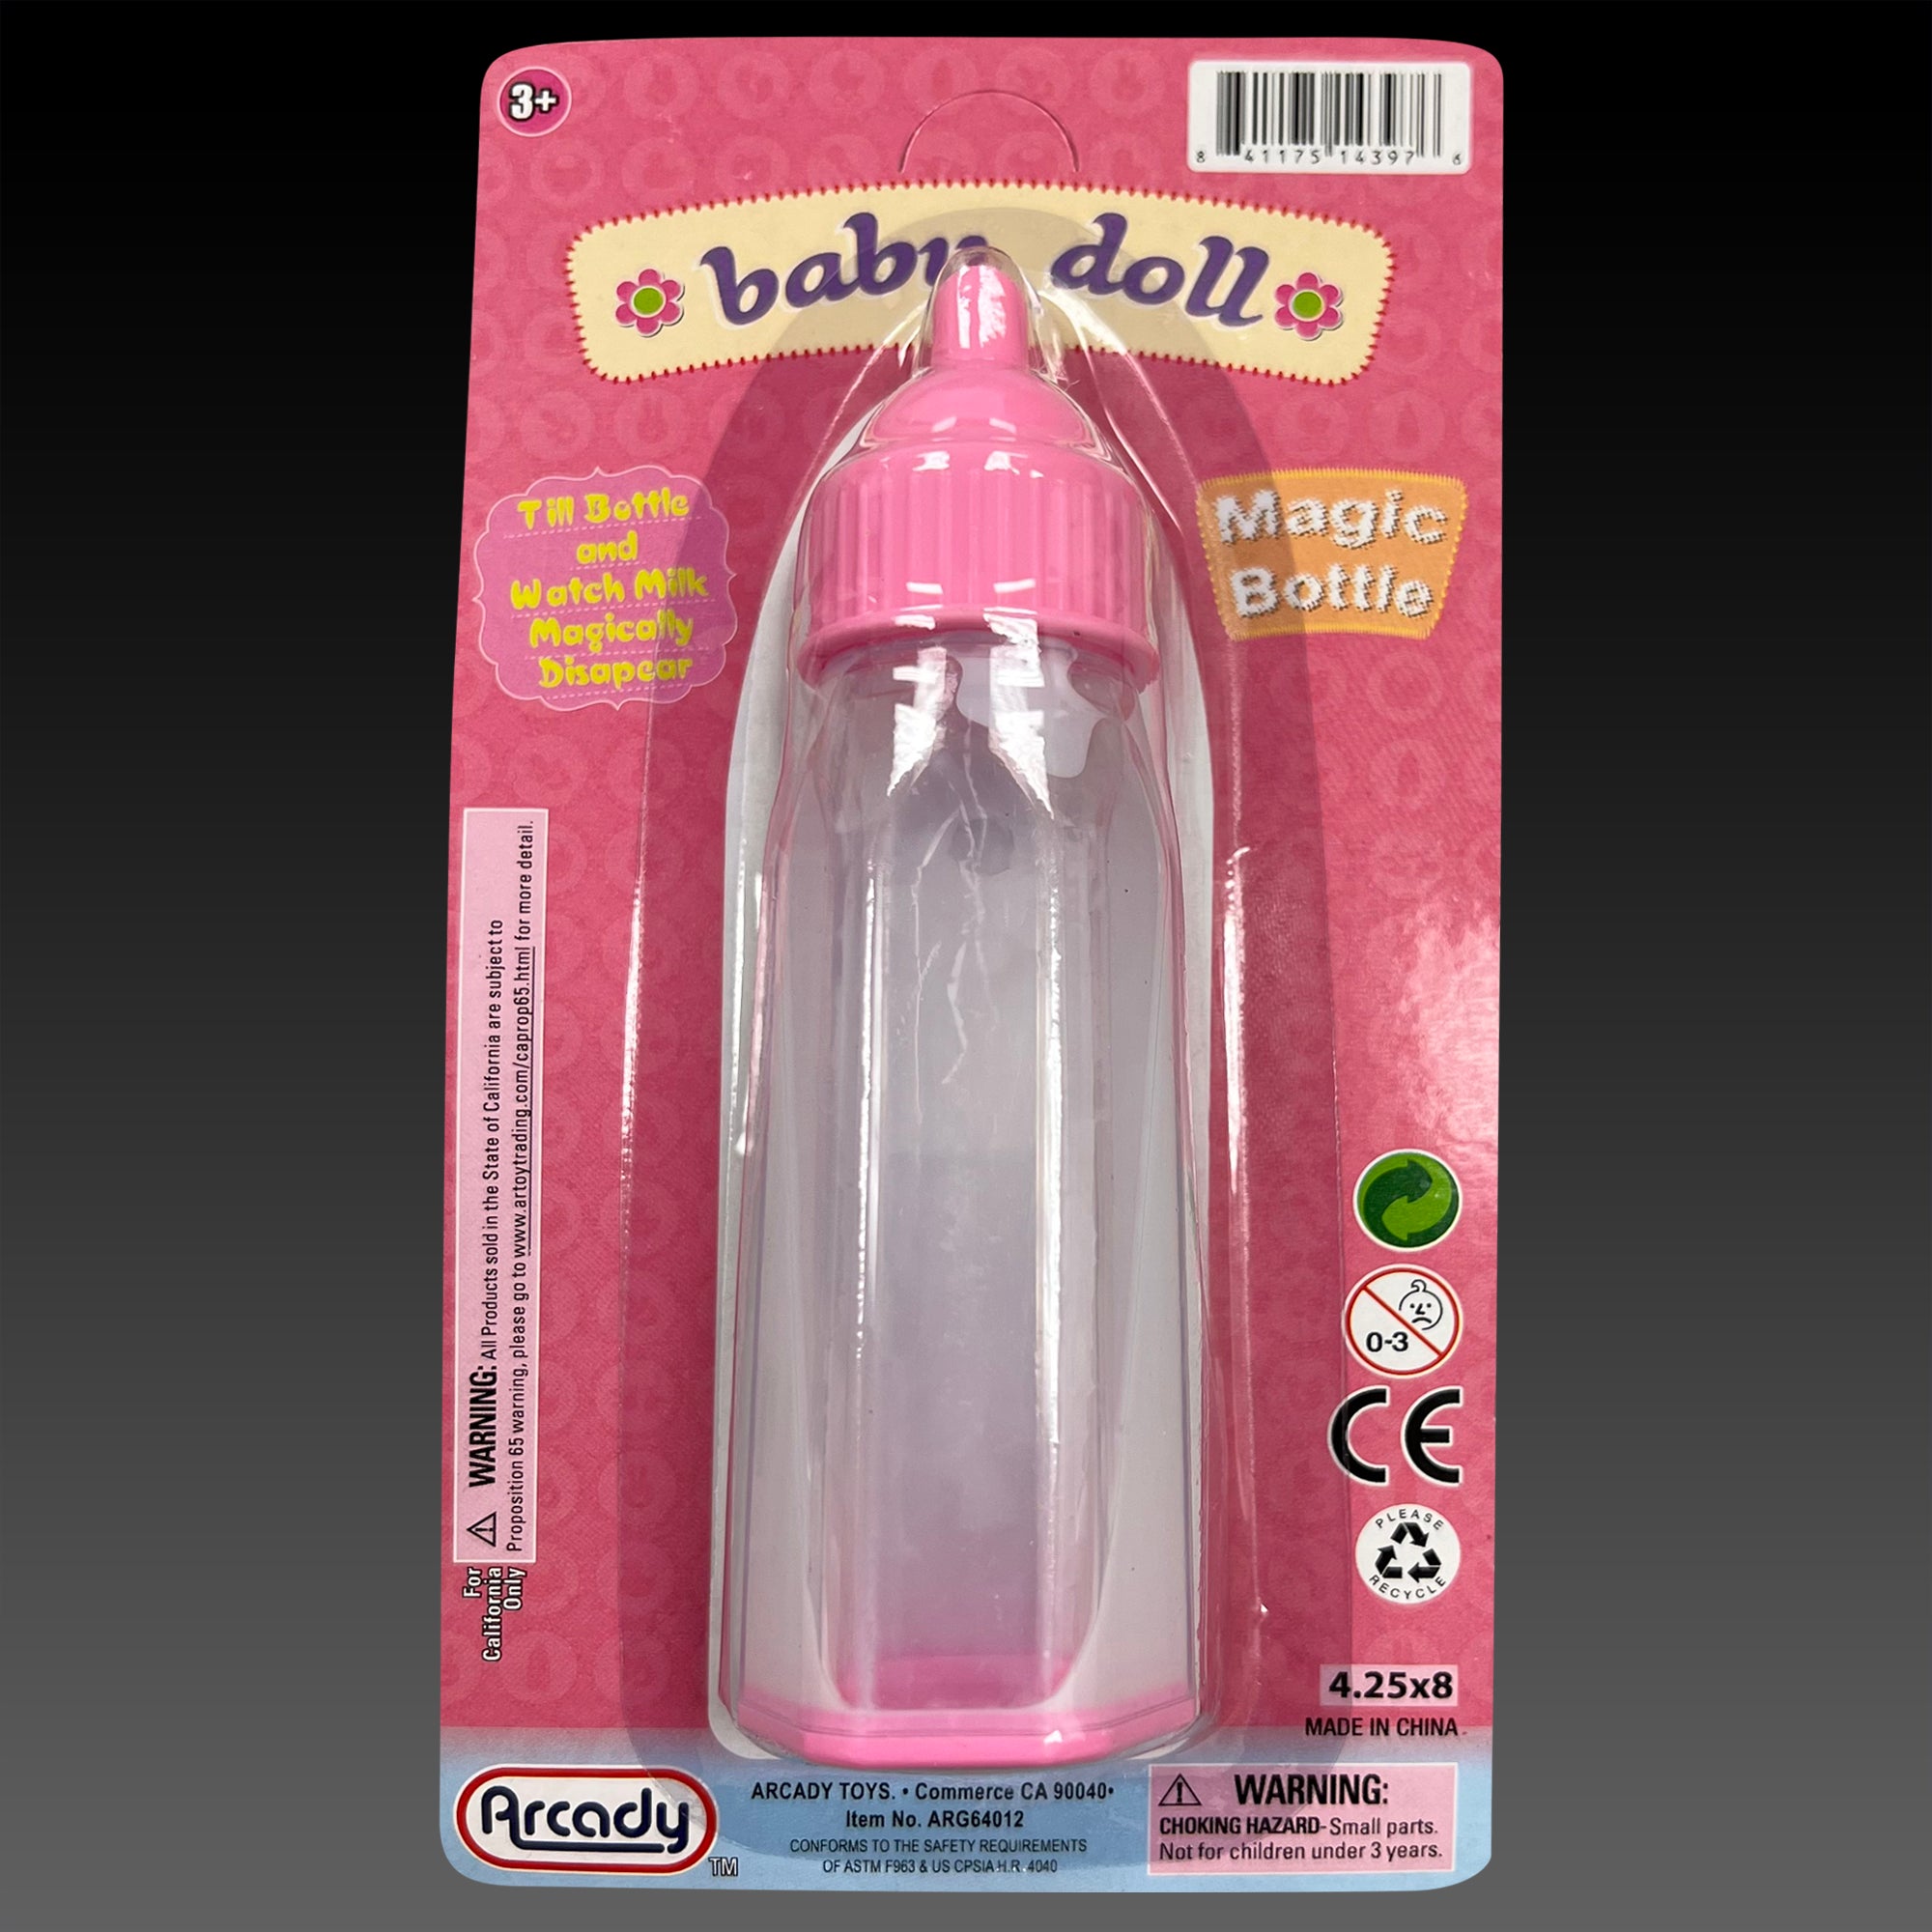 Baby Doll Magic Bottle set